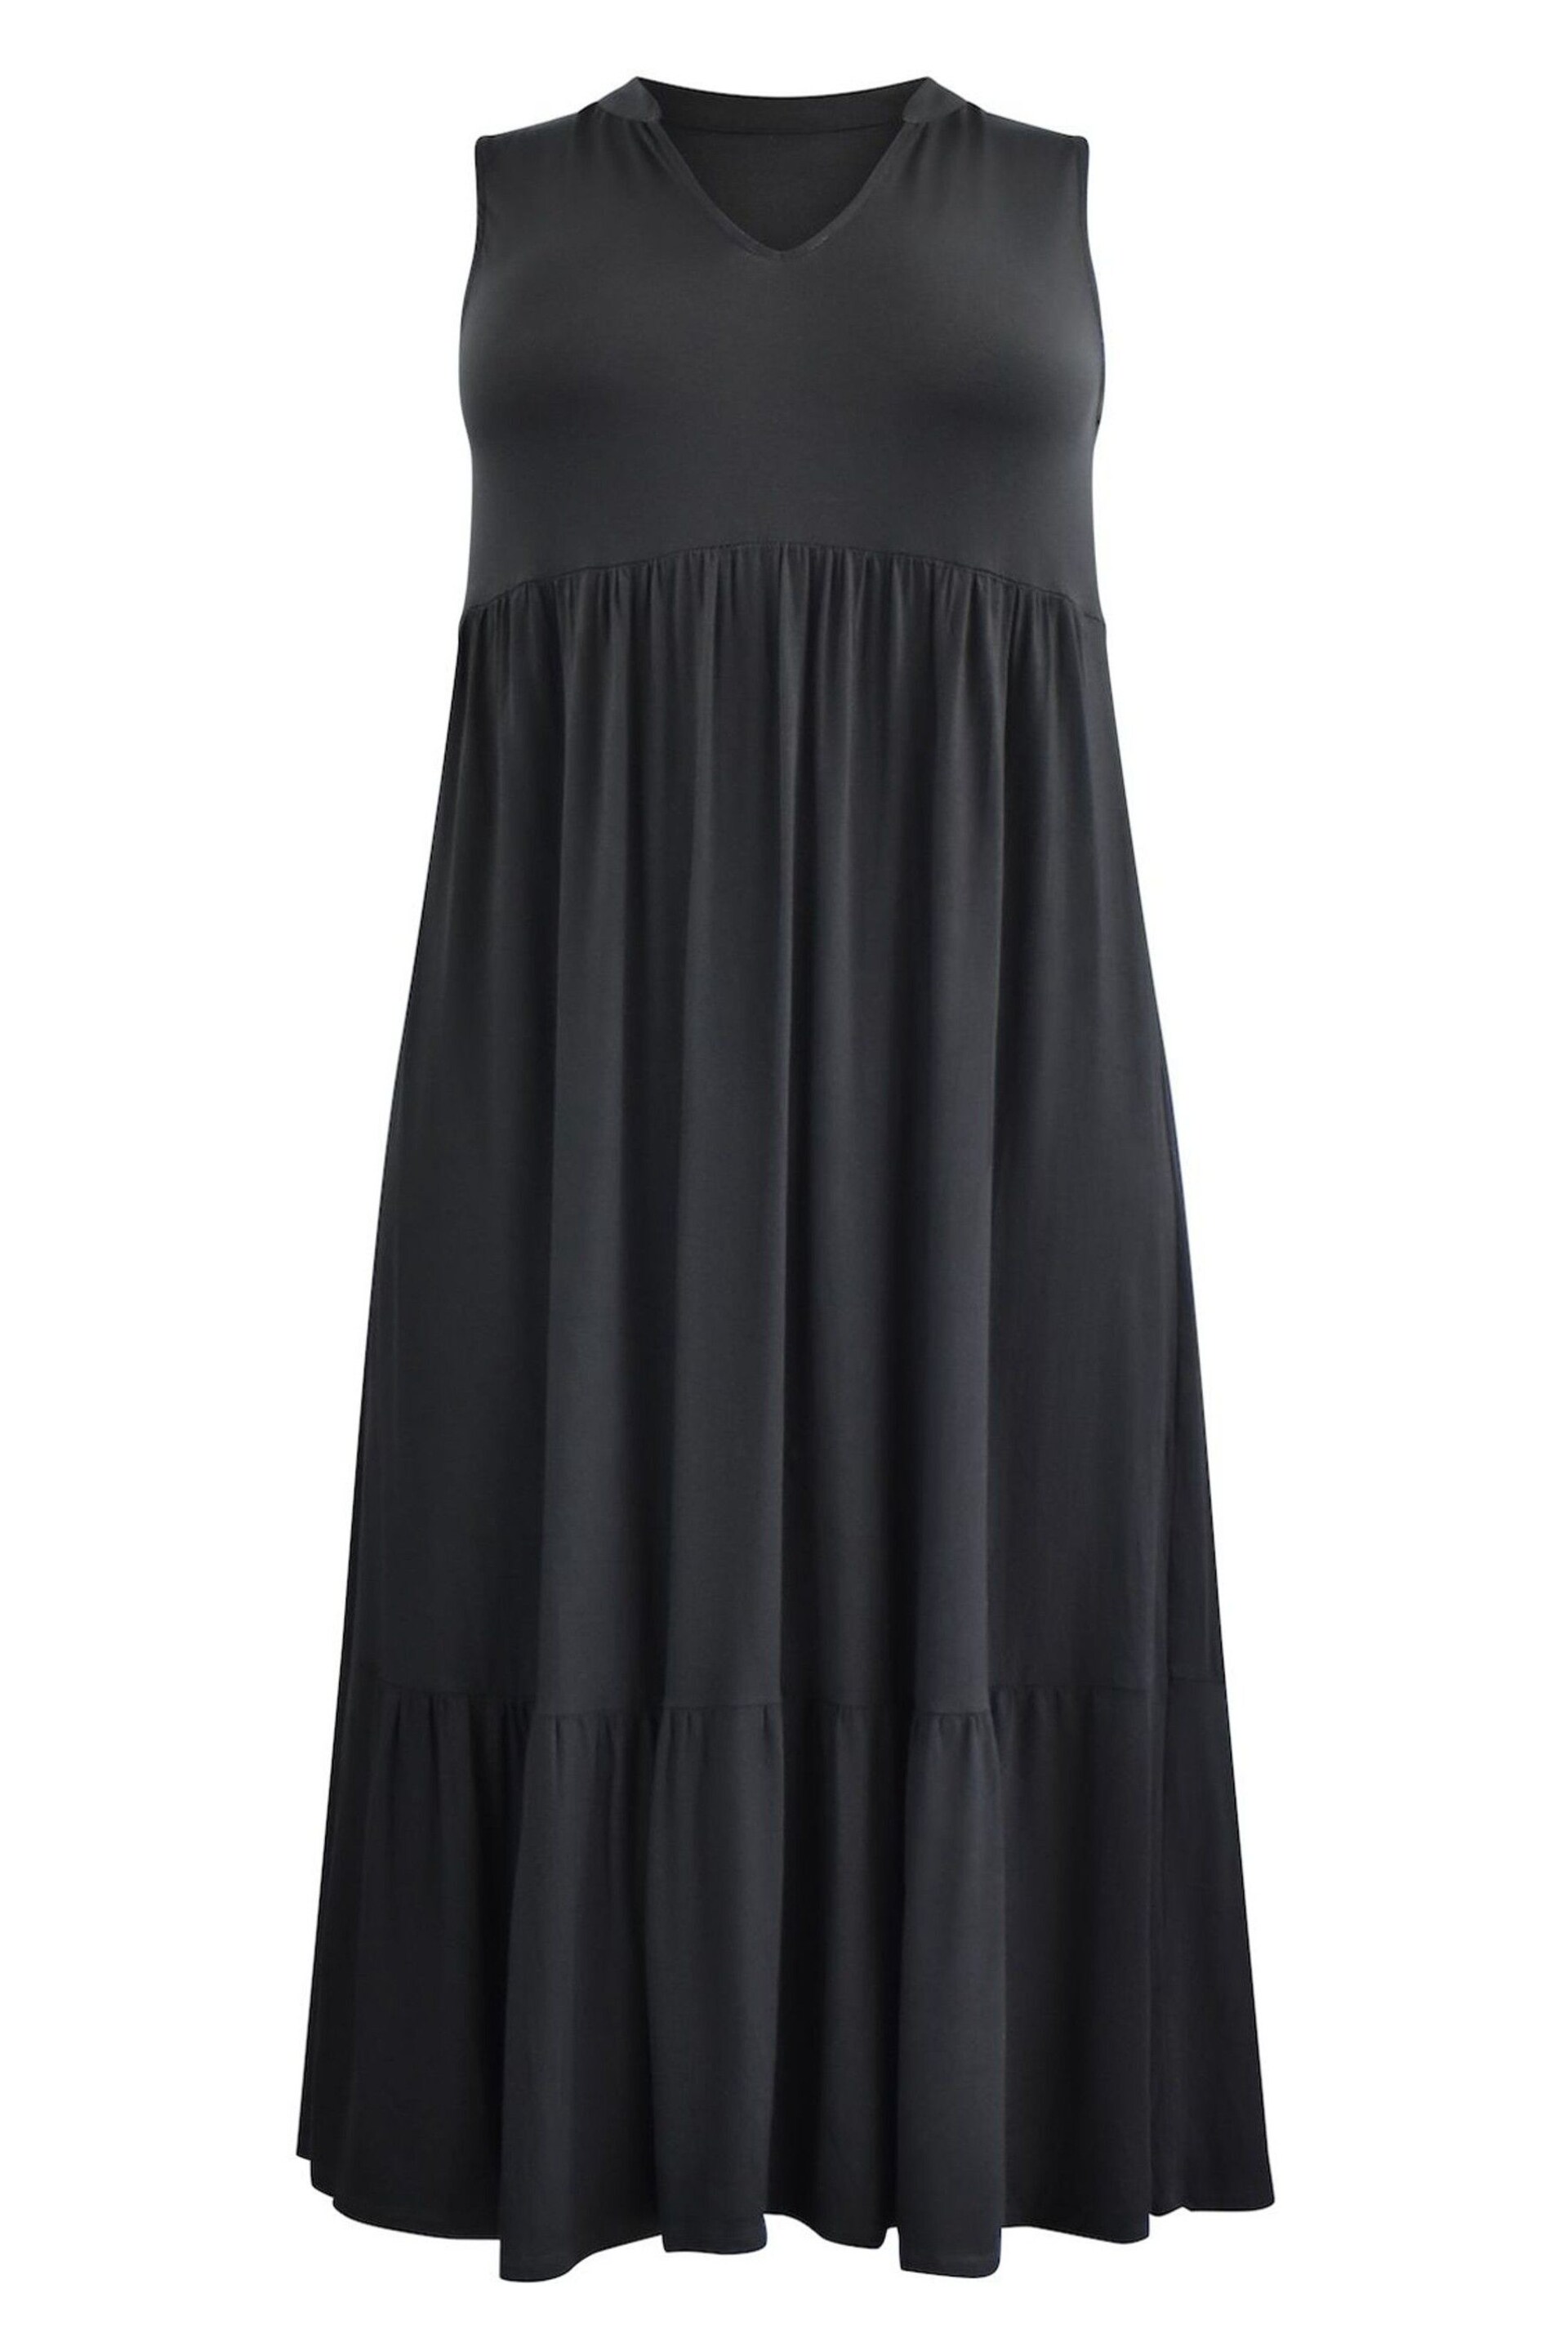 Live Unlimited Curve Jersey Sleeveless Midi Black Dress - Image 7 of 7